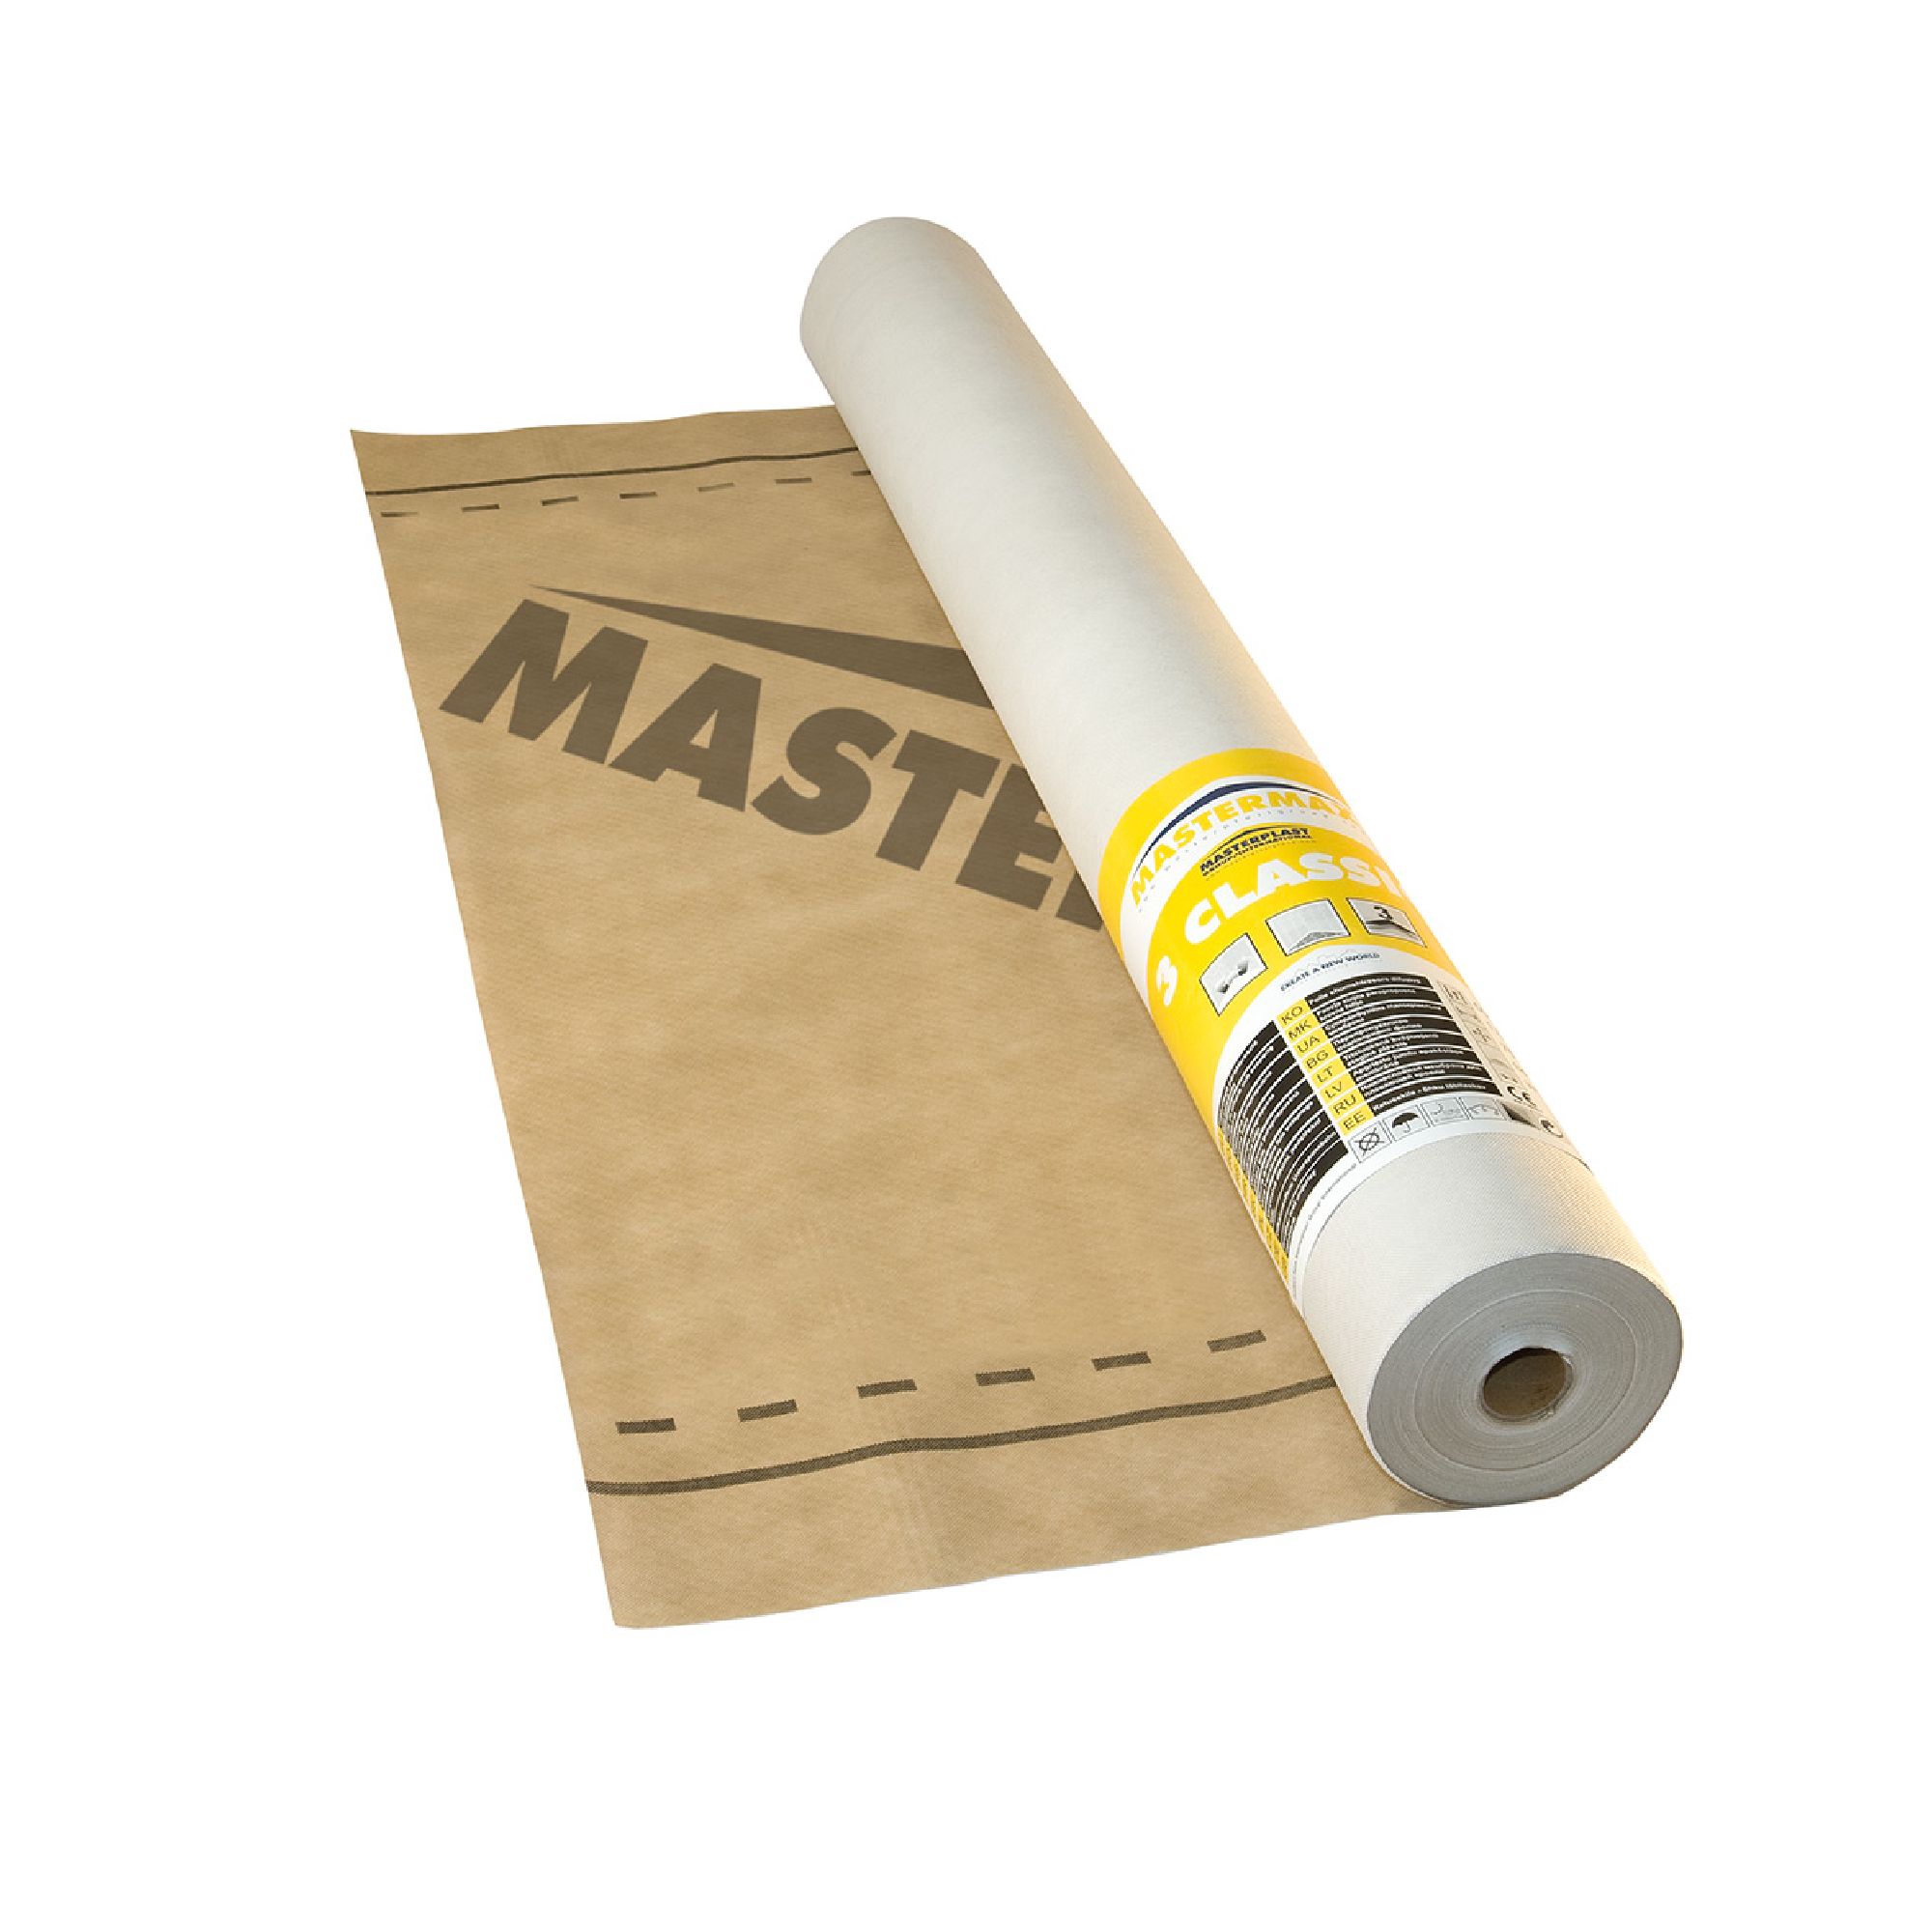 Waterproofing membranes - Mastermax 3 Classic Diffuse Film Membrane 135gsm, 75sqm/roll, https:maxbau.ro